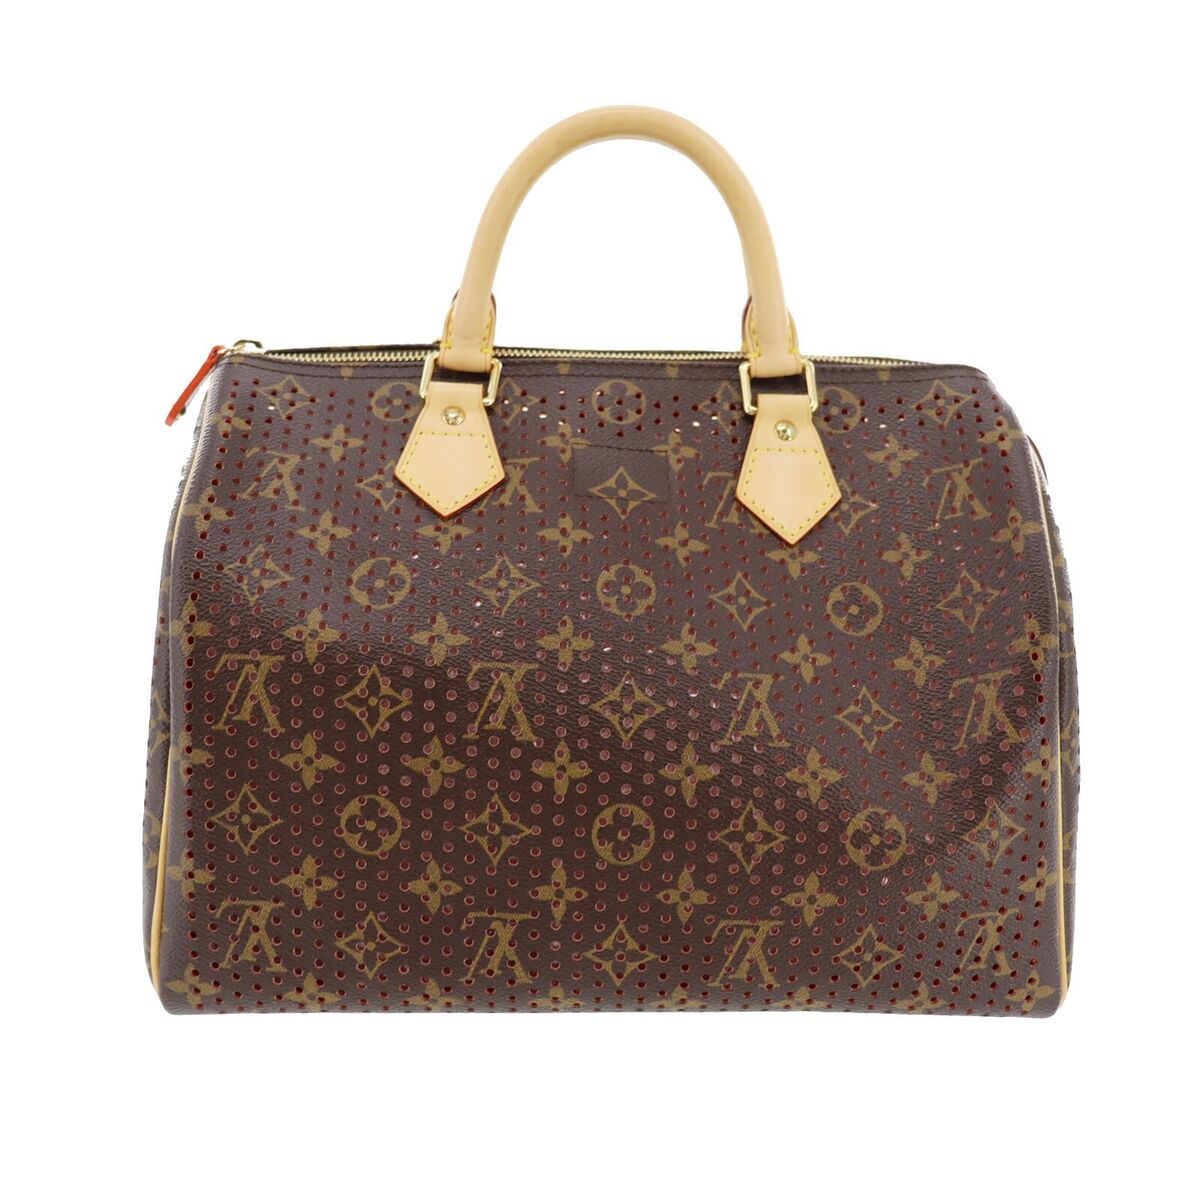 LOUIS VUITTON LV Perfo Speedy 30 Used Handbag Monogram Leather M95182  #BY837 S